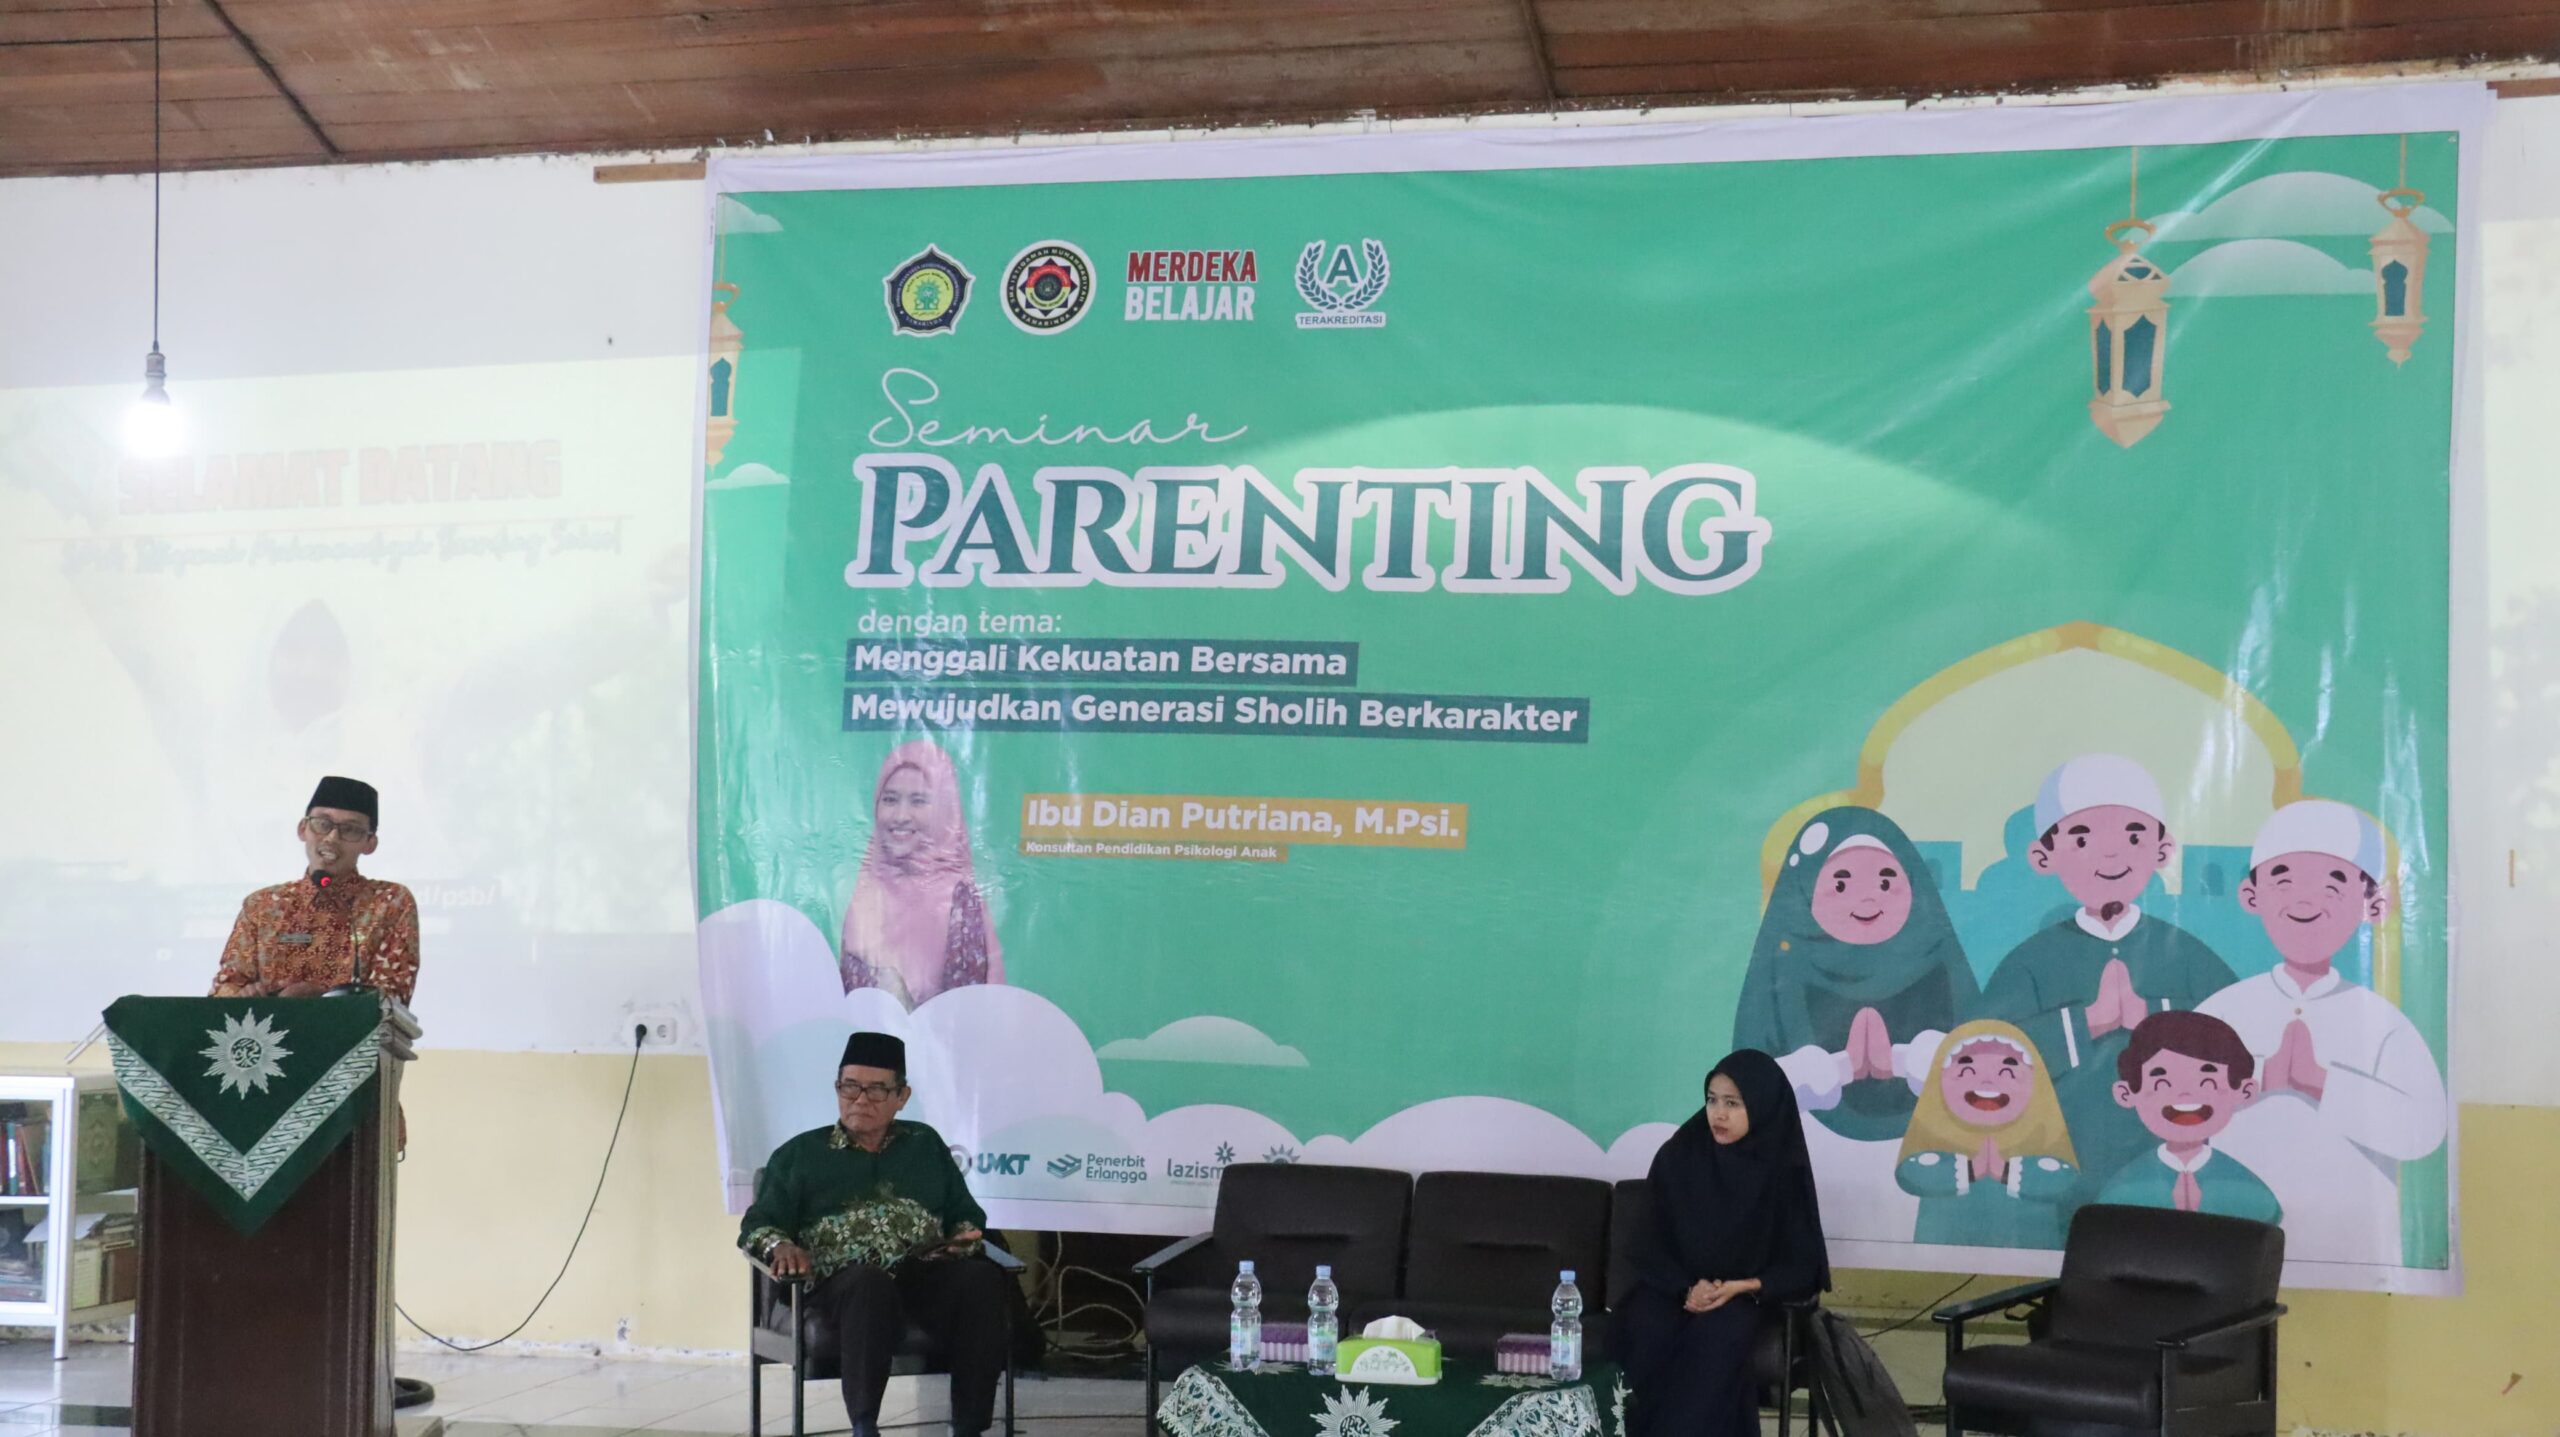 Seminar Parenting SMA Istiqamah Muhammadiyah dengan Tema “Menggali Kekuatan Bersama Mewujudkan Generasi Sholih Berkarakter”